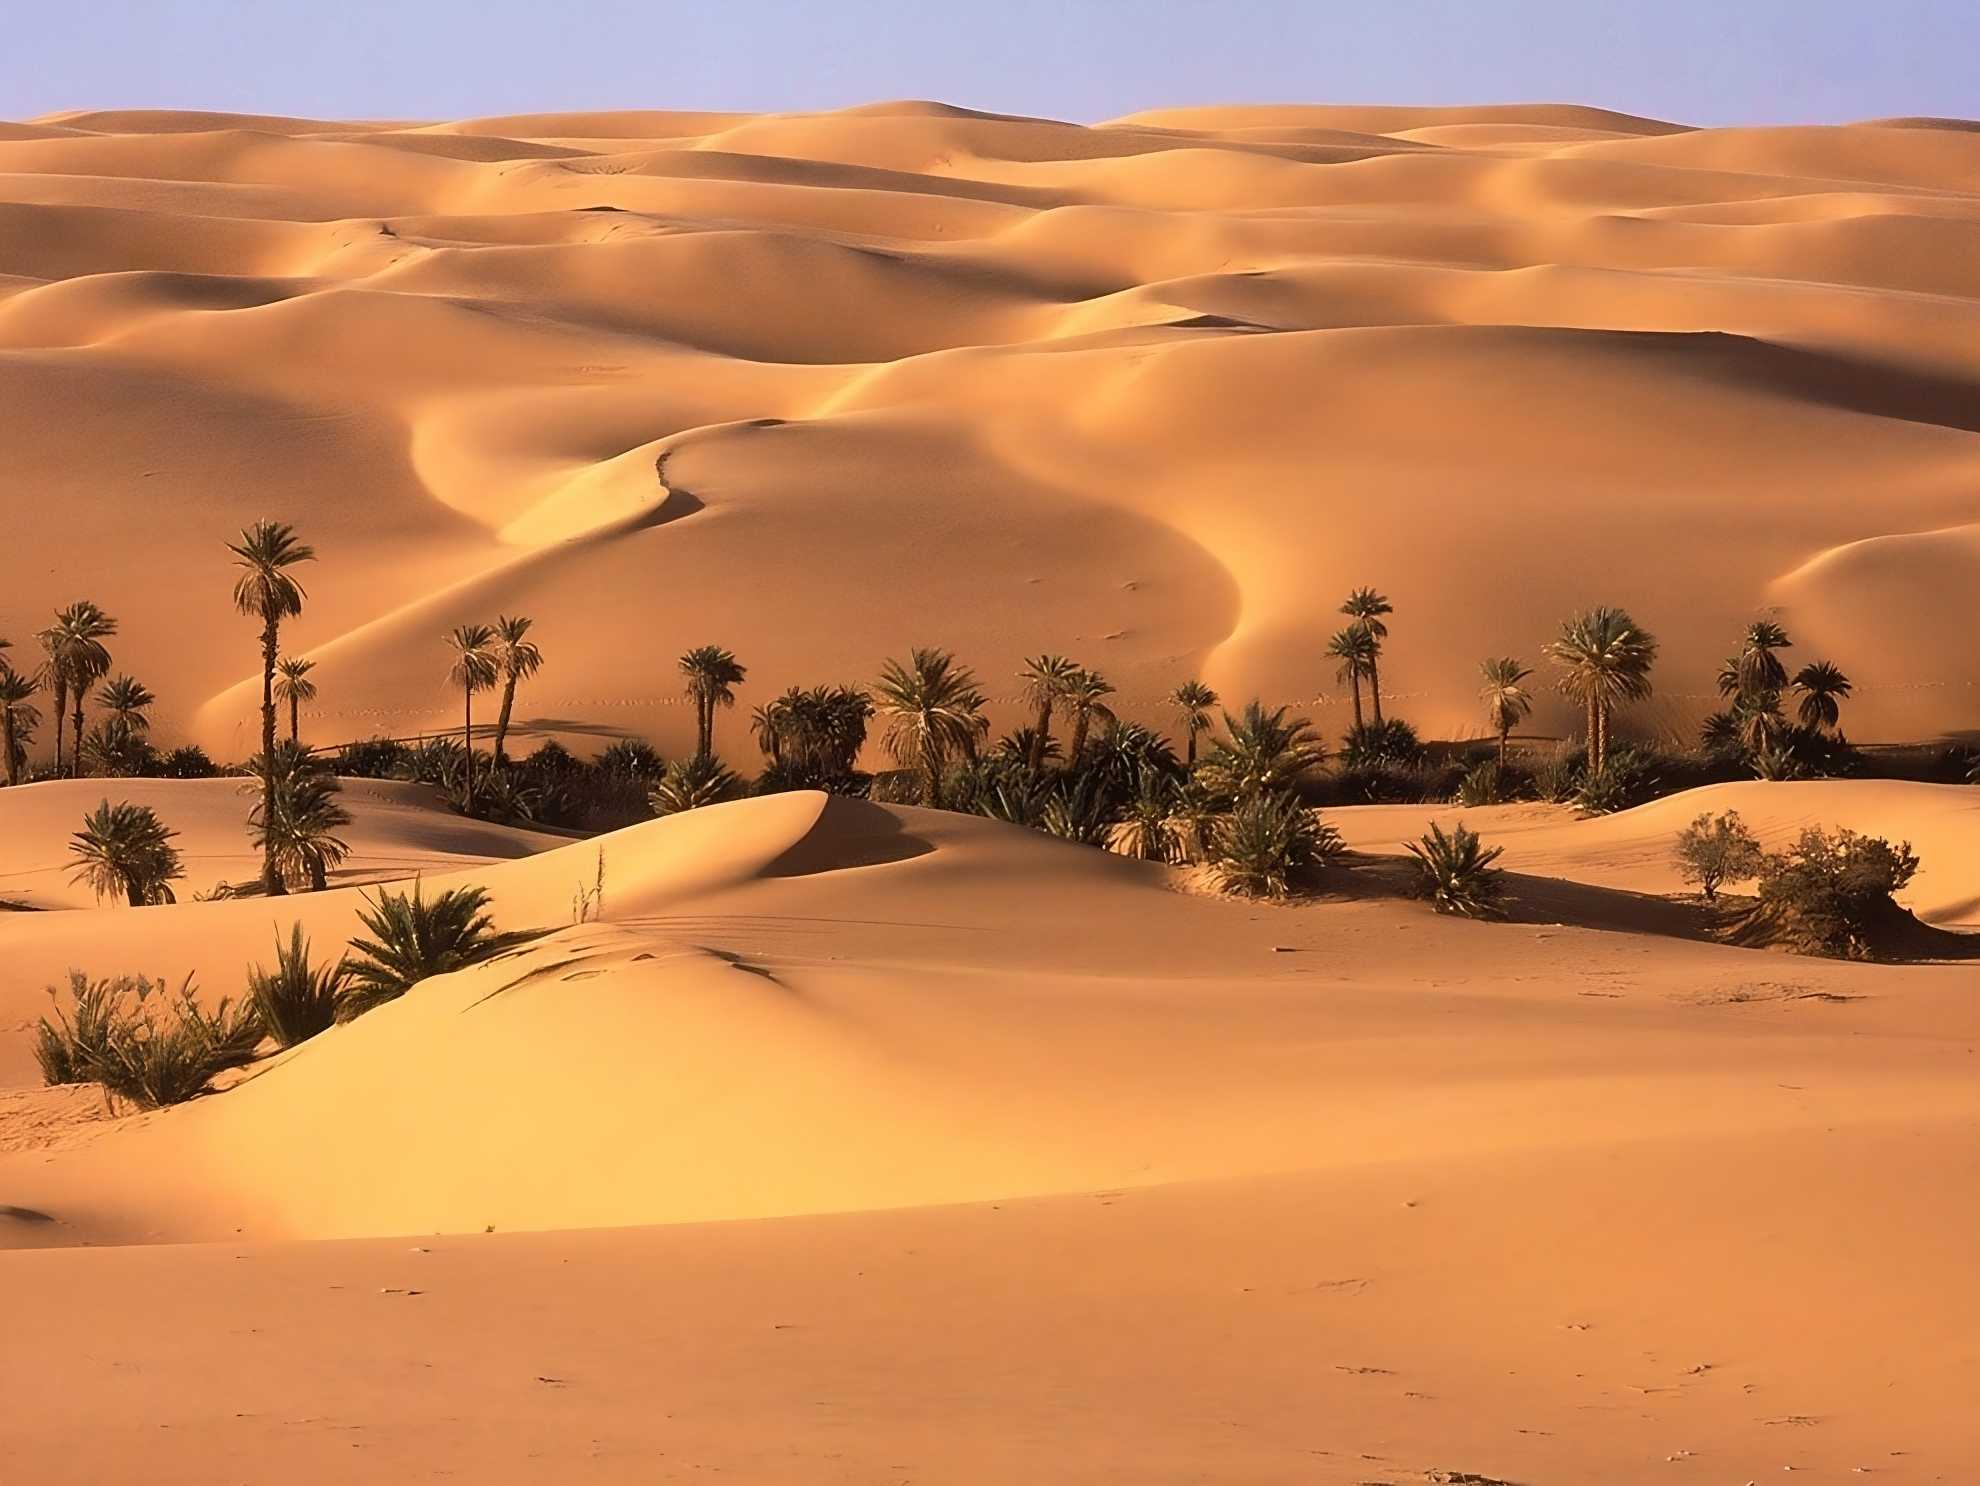 Seba Oasis, near Sabha, Libya, is in the middle of the Sahara Desert.